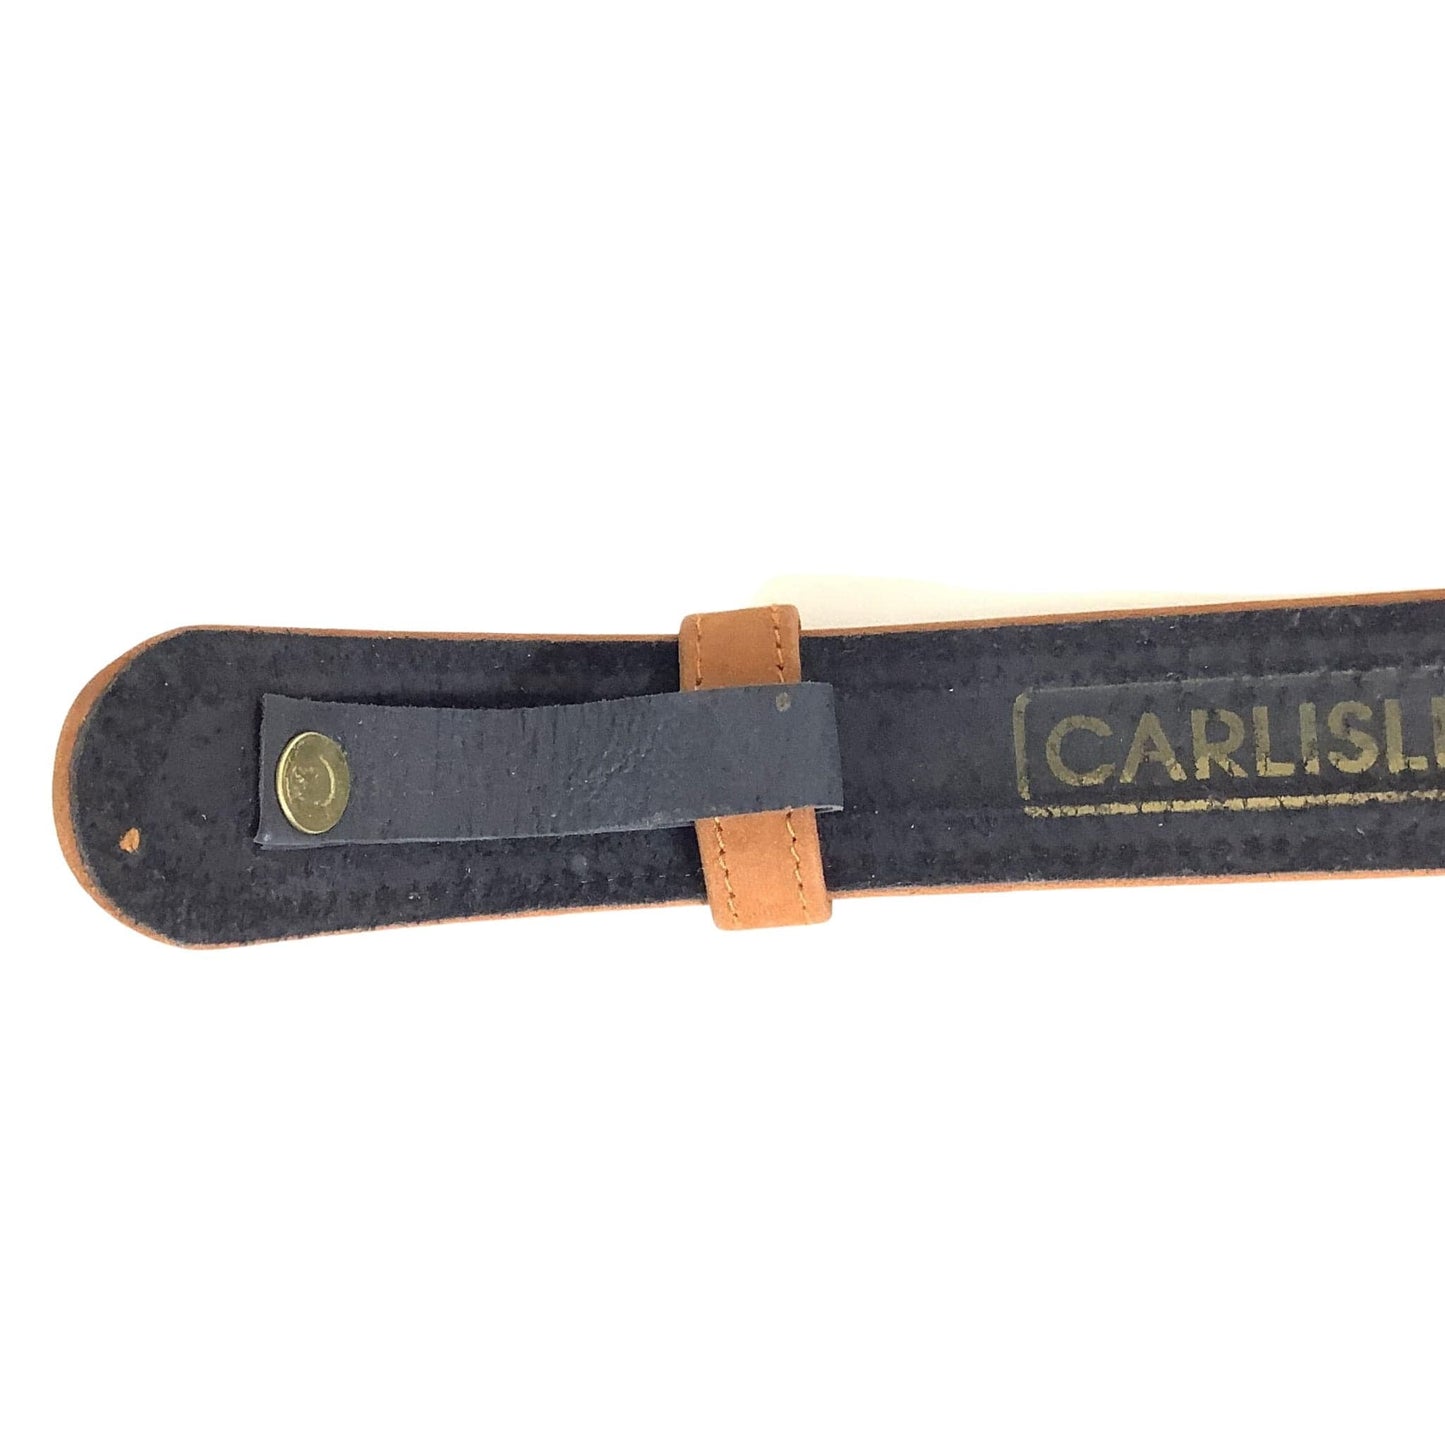 Vintage Bejeweled Belt Small / Tan / Vintage 1980s